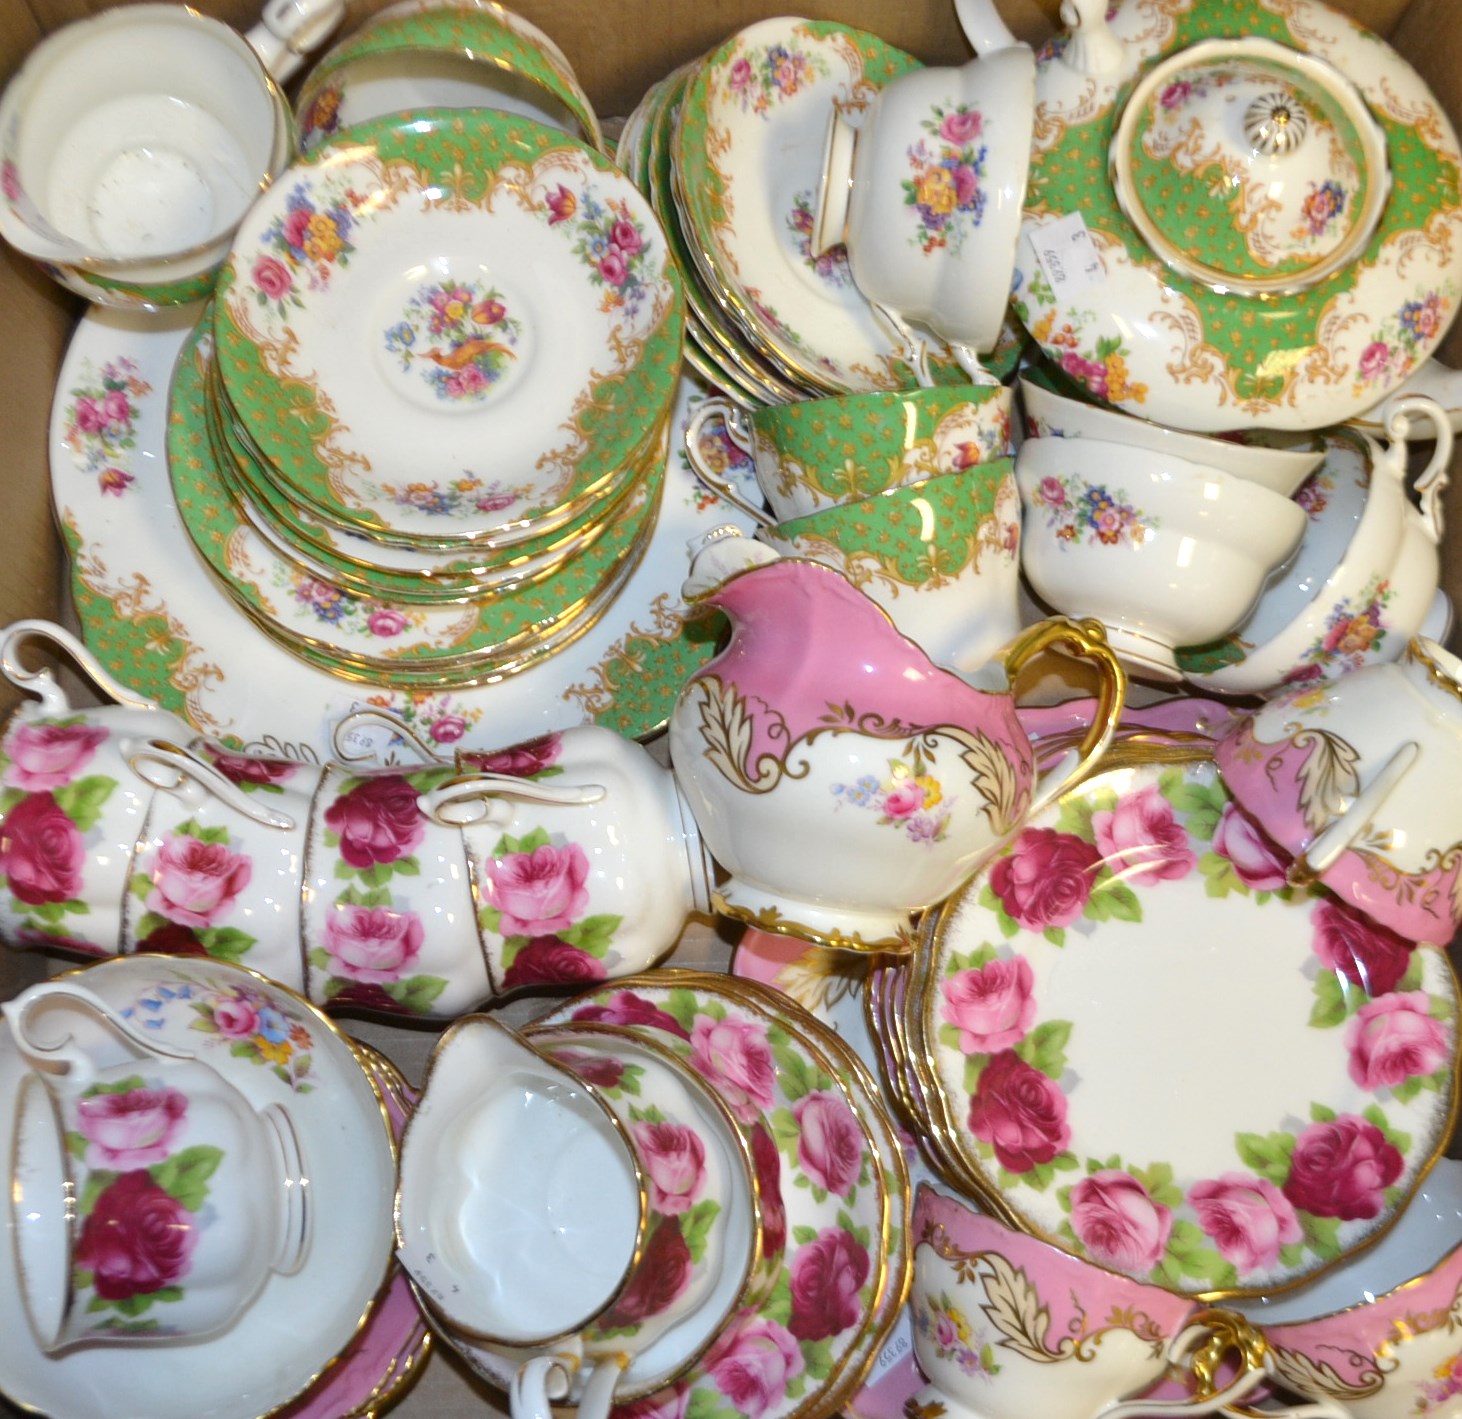 Tableware - a Paragon Rockingham pattern tea service,